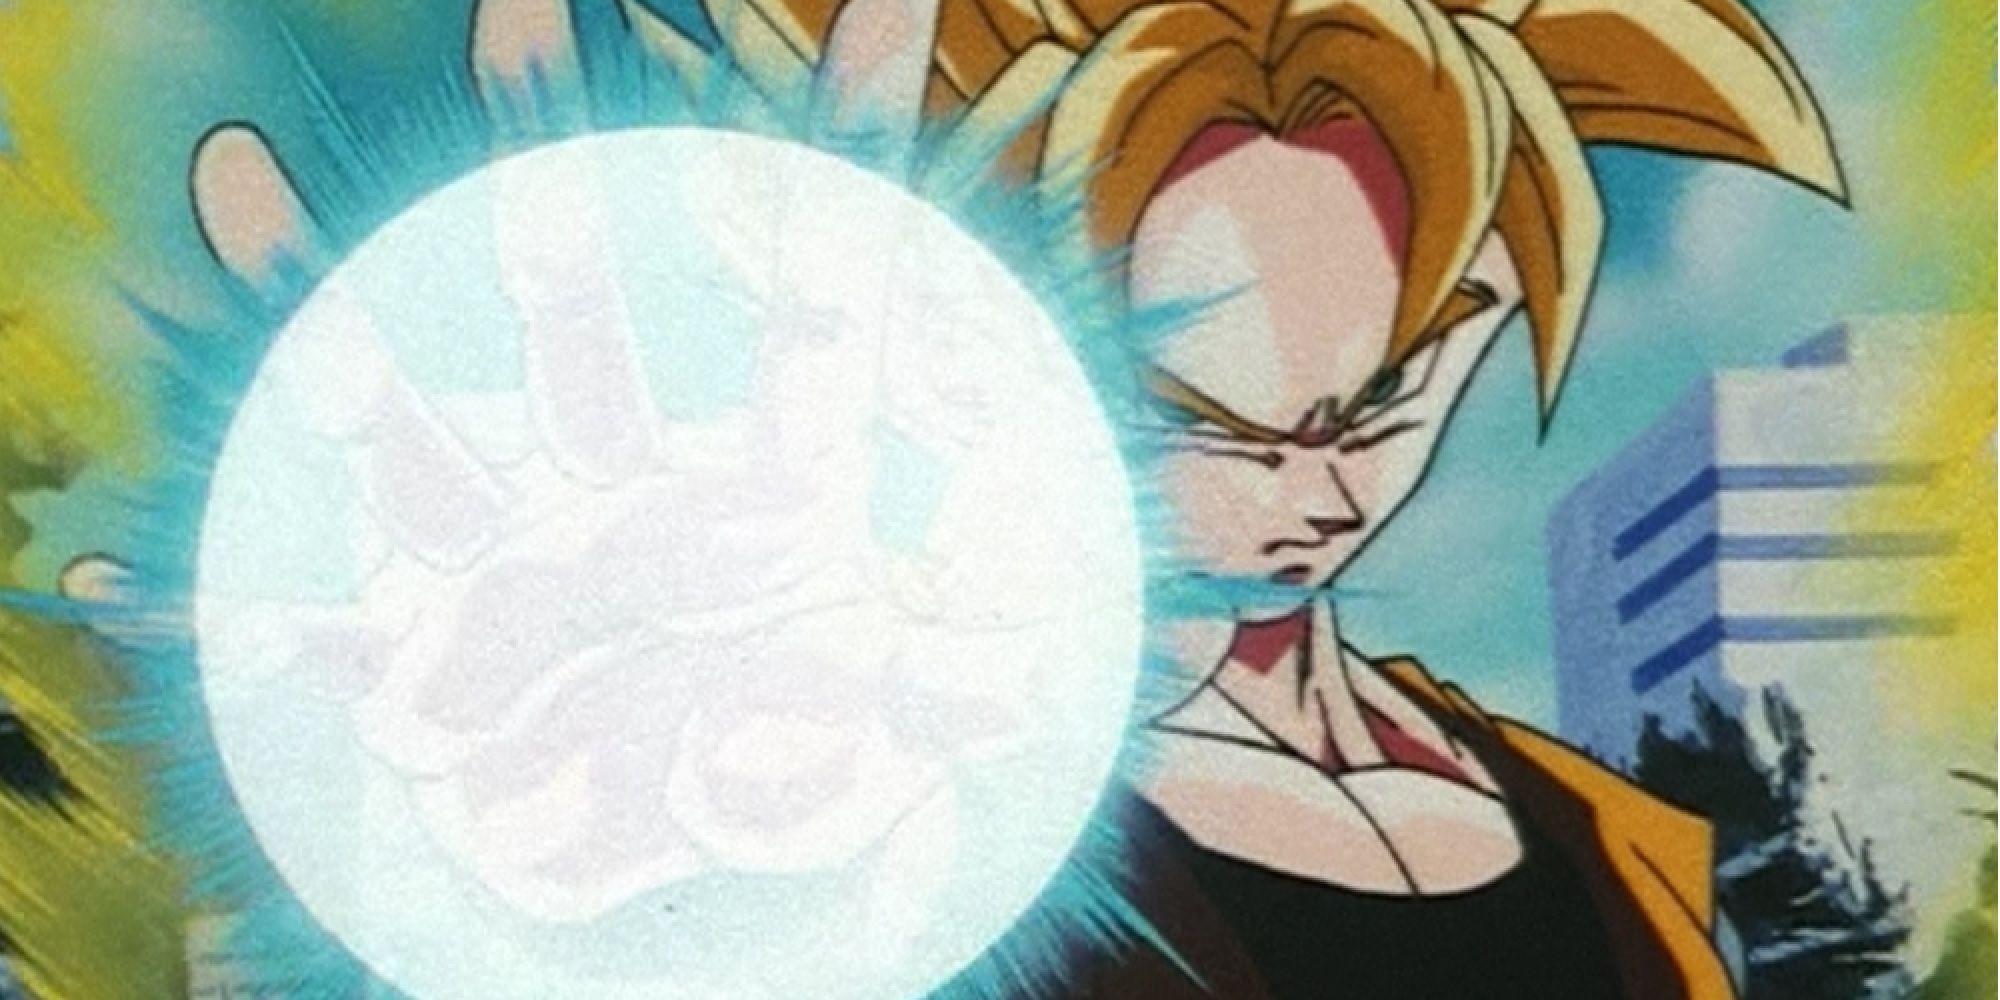 Goku readies a blast to fire at the Supreme Kai in Dragon Ball Z